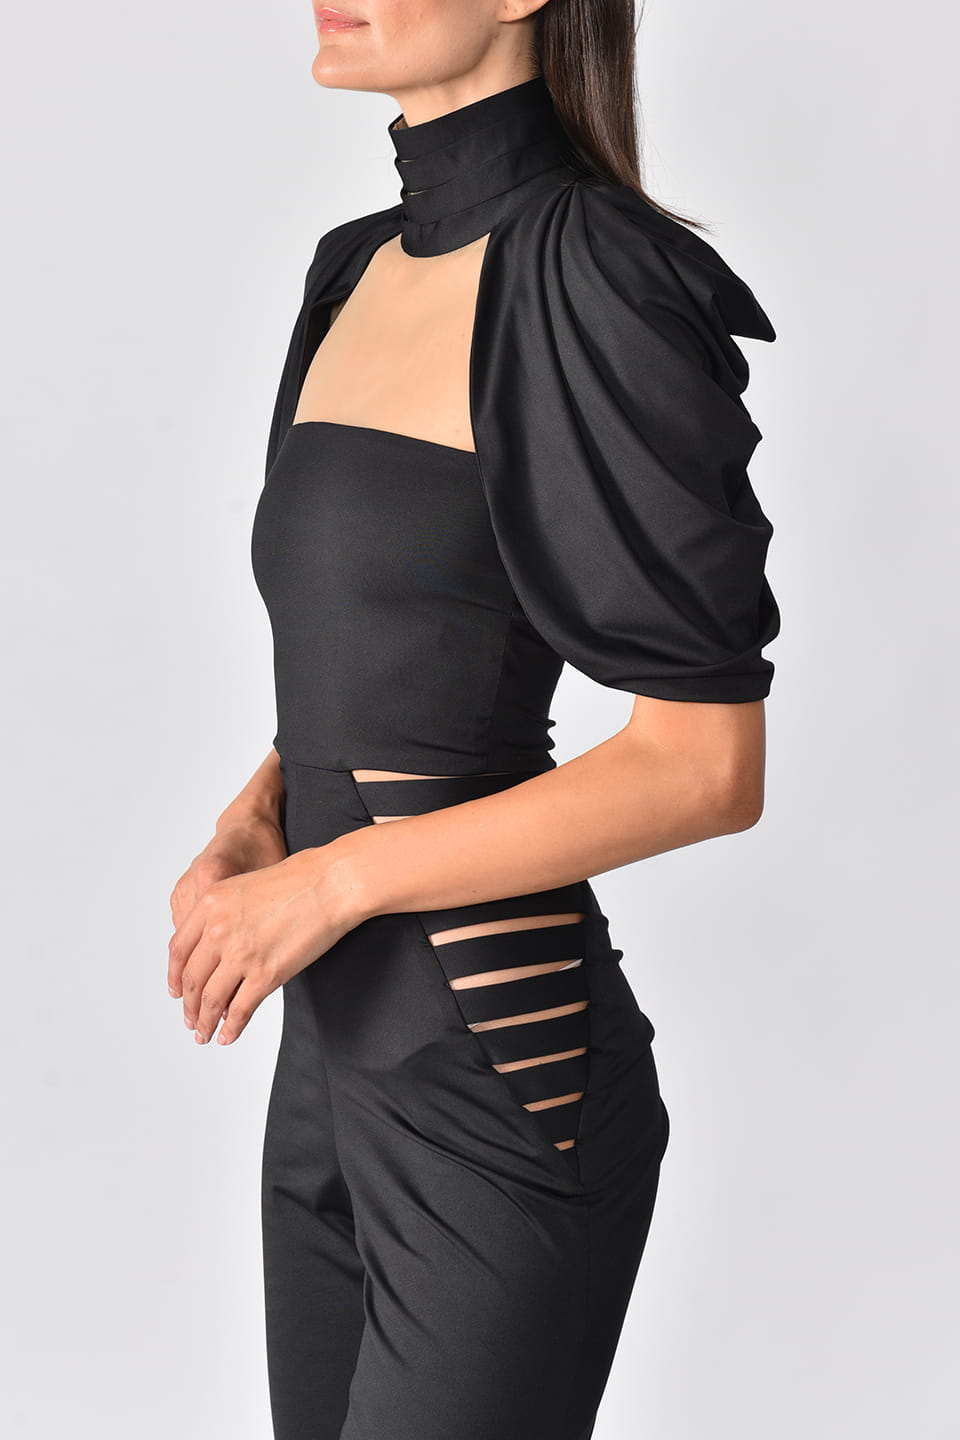 Hamel fashion designer Jumpsuit to shop online. Black color, stretchy material, ideal for special occasions